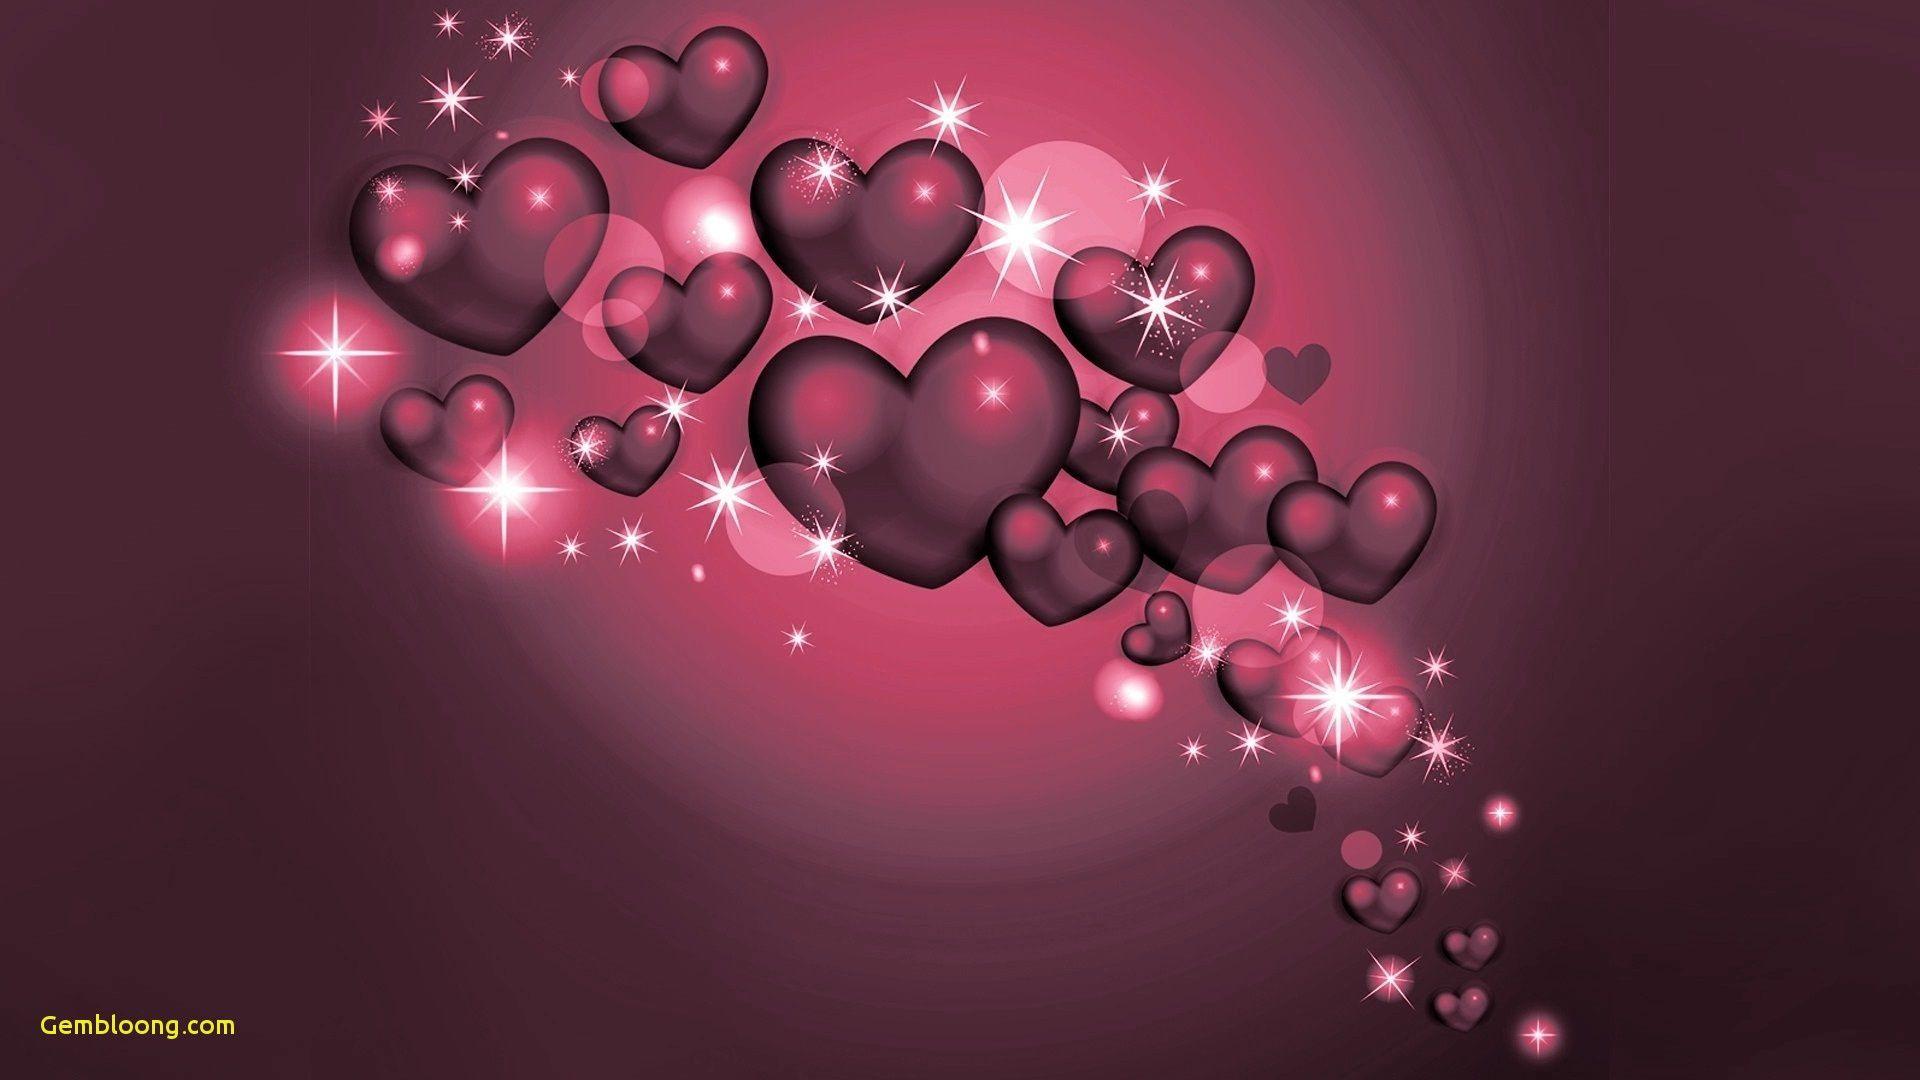 Hd 3D Wallpaper Downloads Awesome Beautiful Love Heart Wallpaper